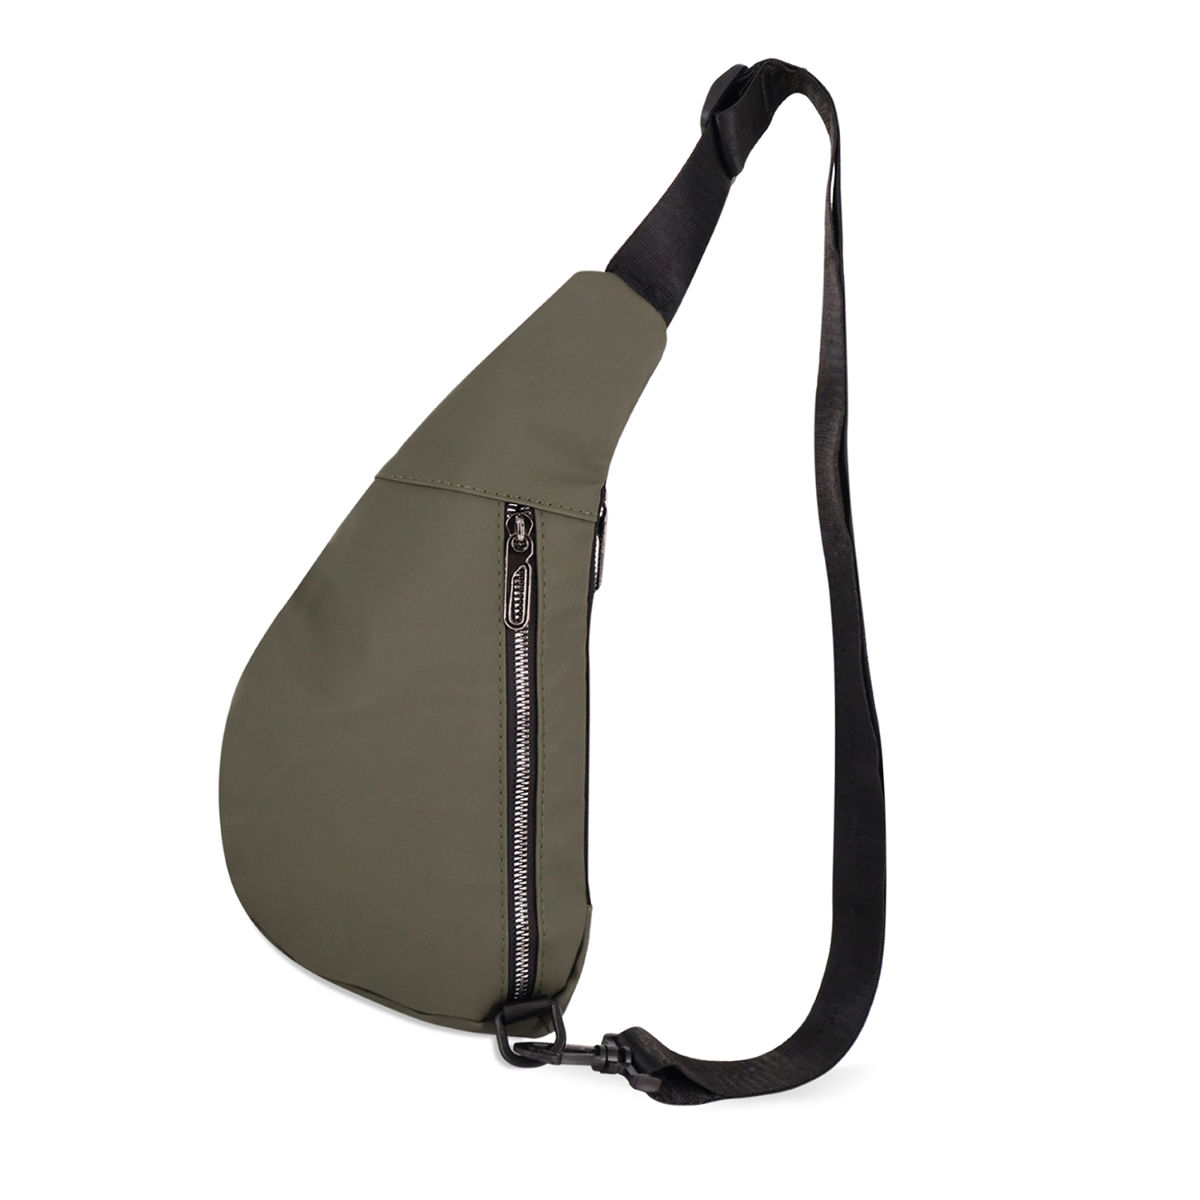 Blowzy Sling Bag Messenger Bag Shoulder Bags Travel Bag Cross Body Bags for  MenBoys Unisex Color Tan  Amazonin Fashion